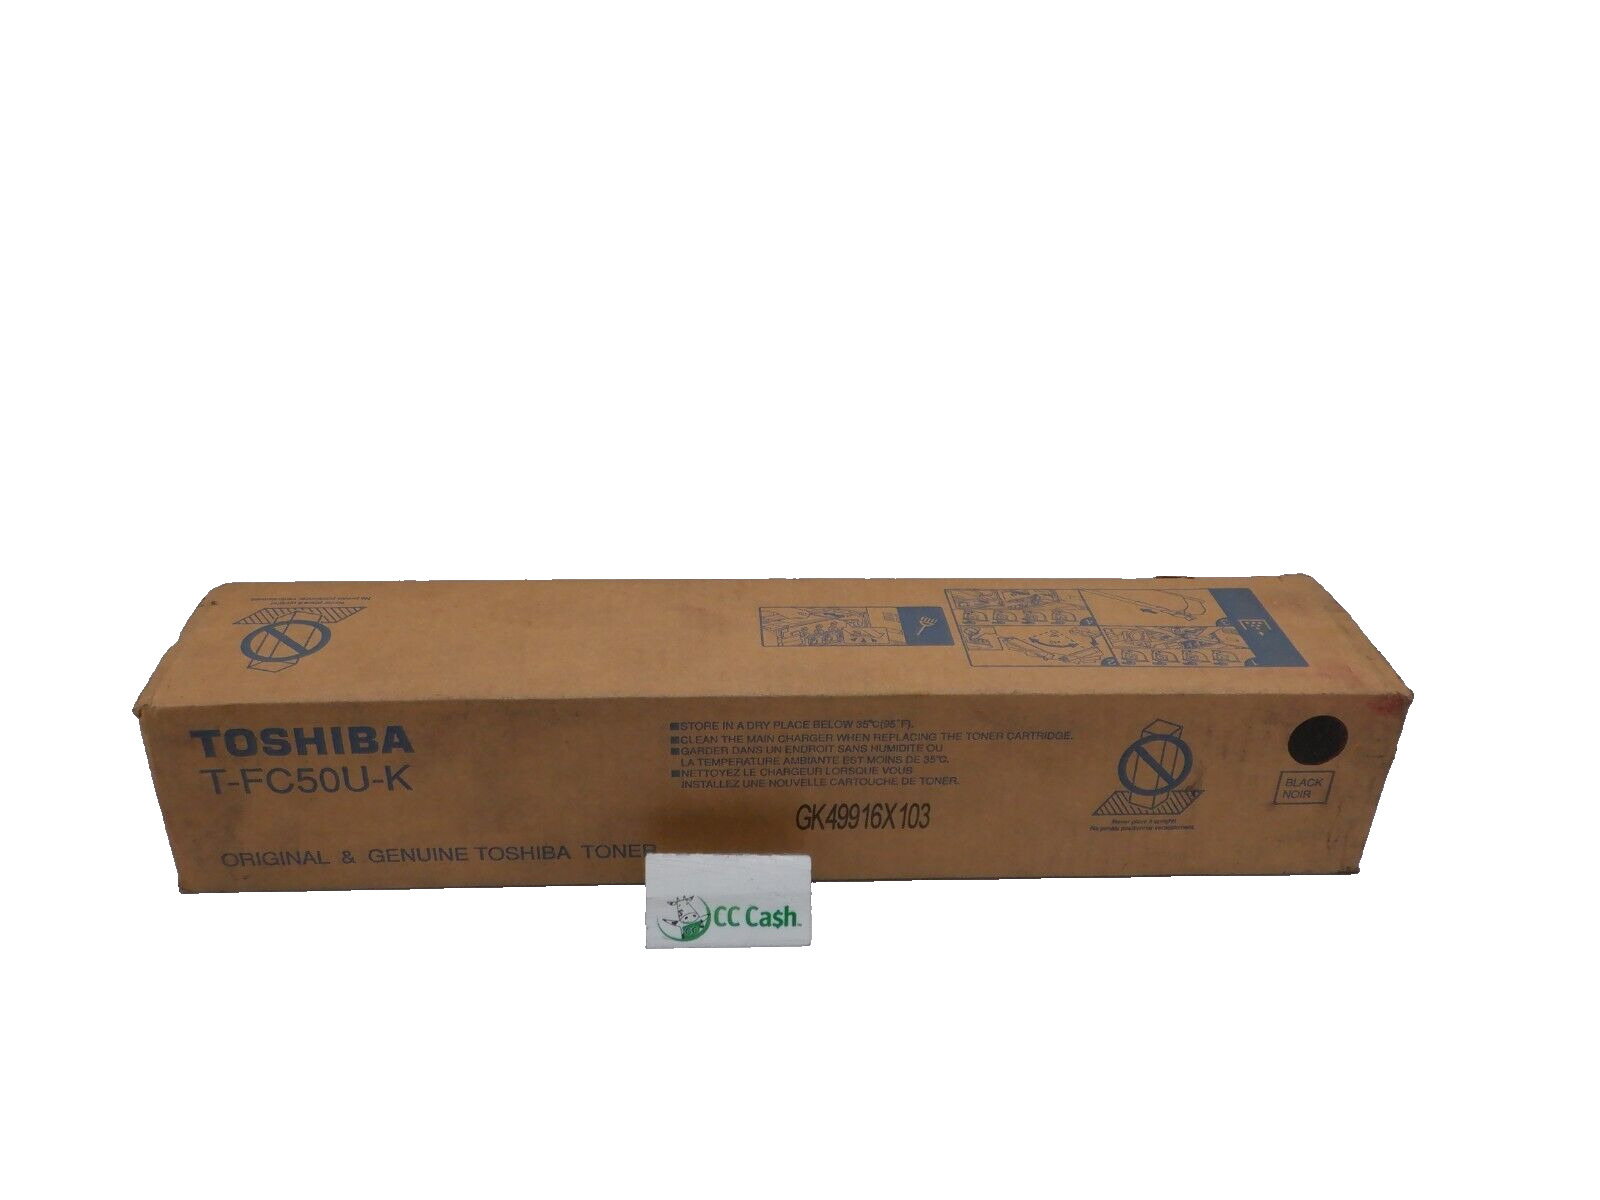 Genuine Toshiba T-FC50U-K Black Toner Cartridge F. Shipping D